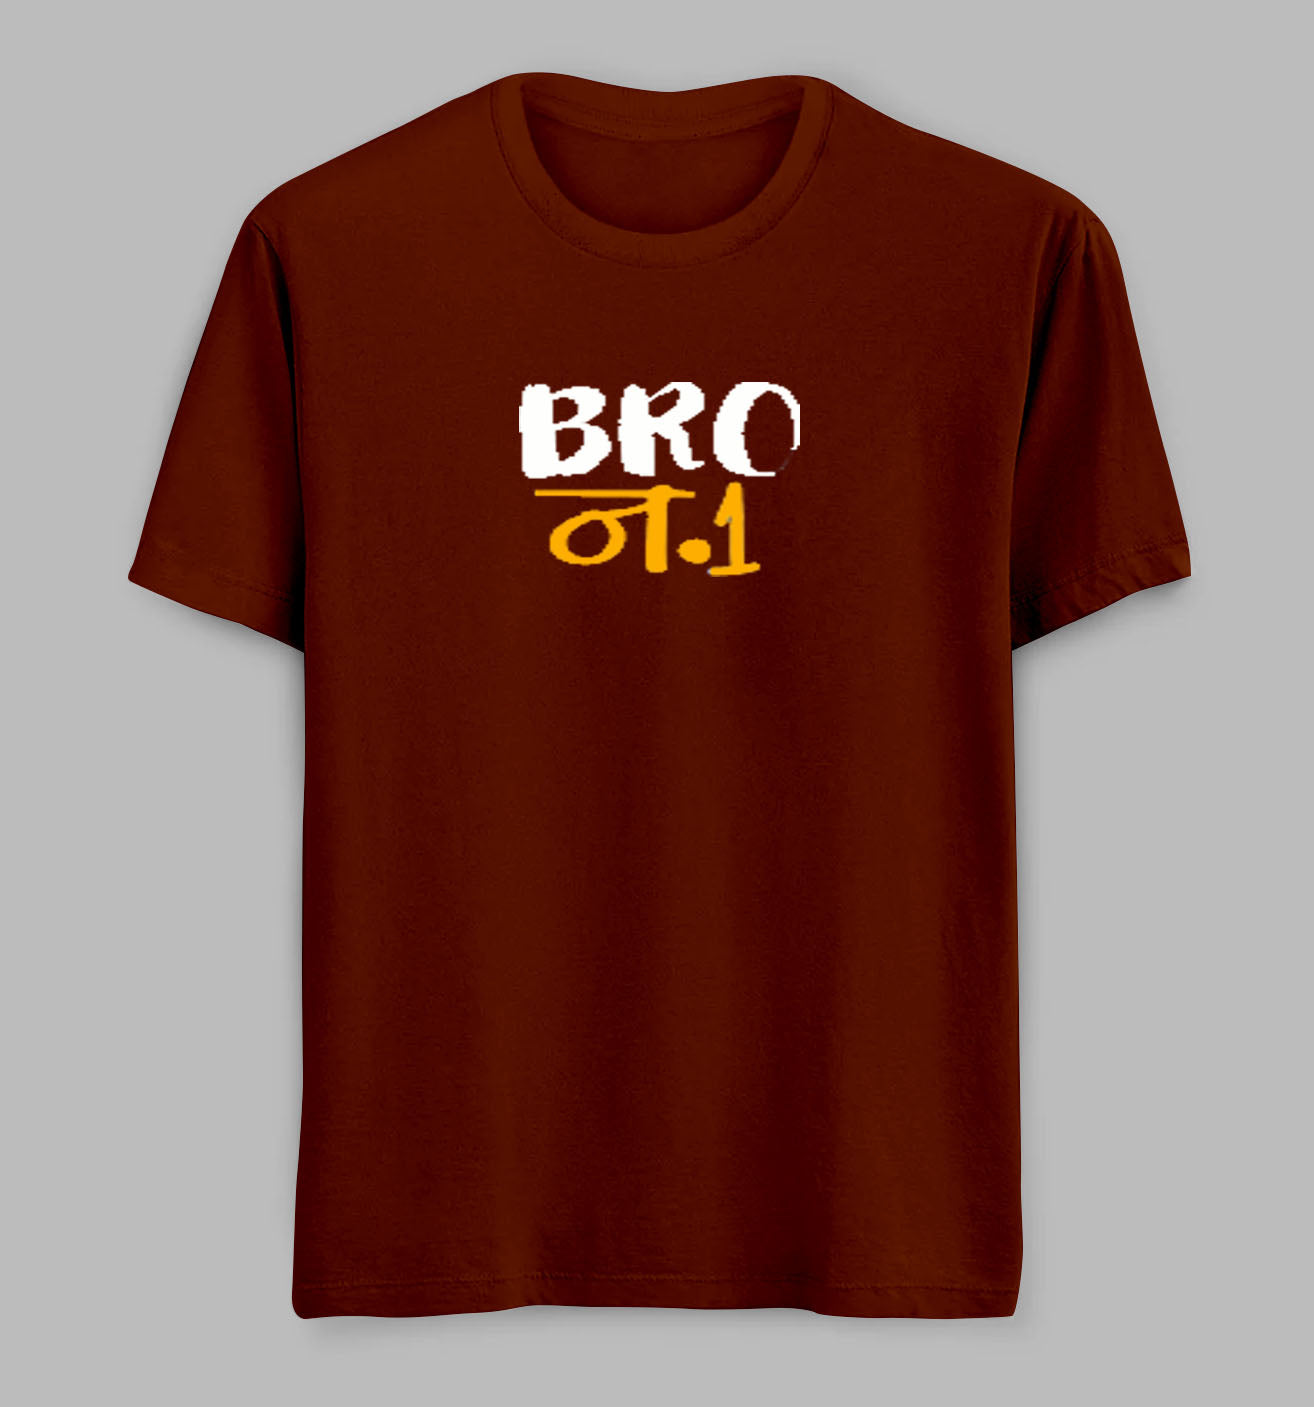 Bro No 1 Tees/ Tshirts